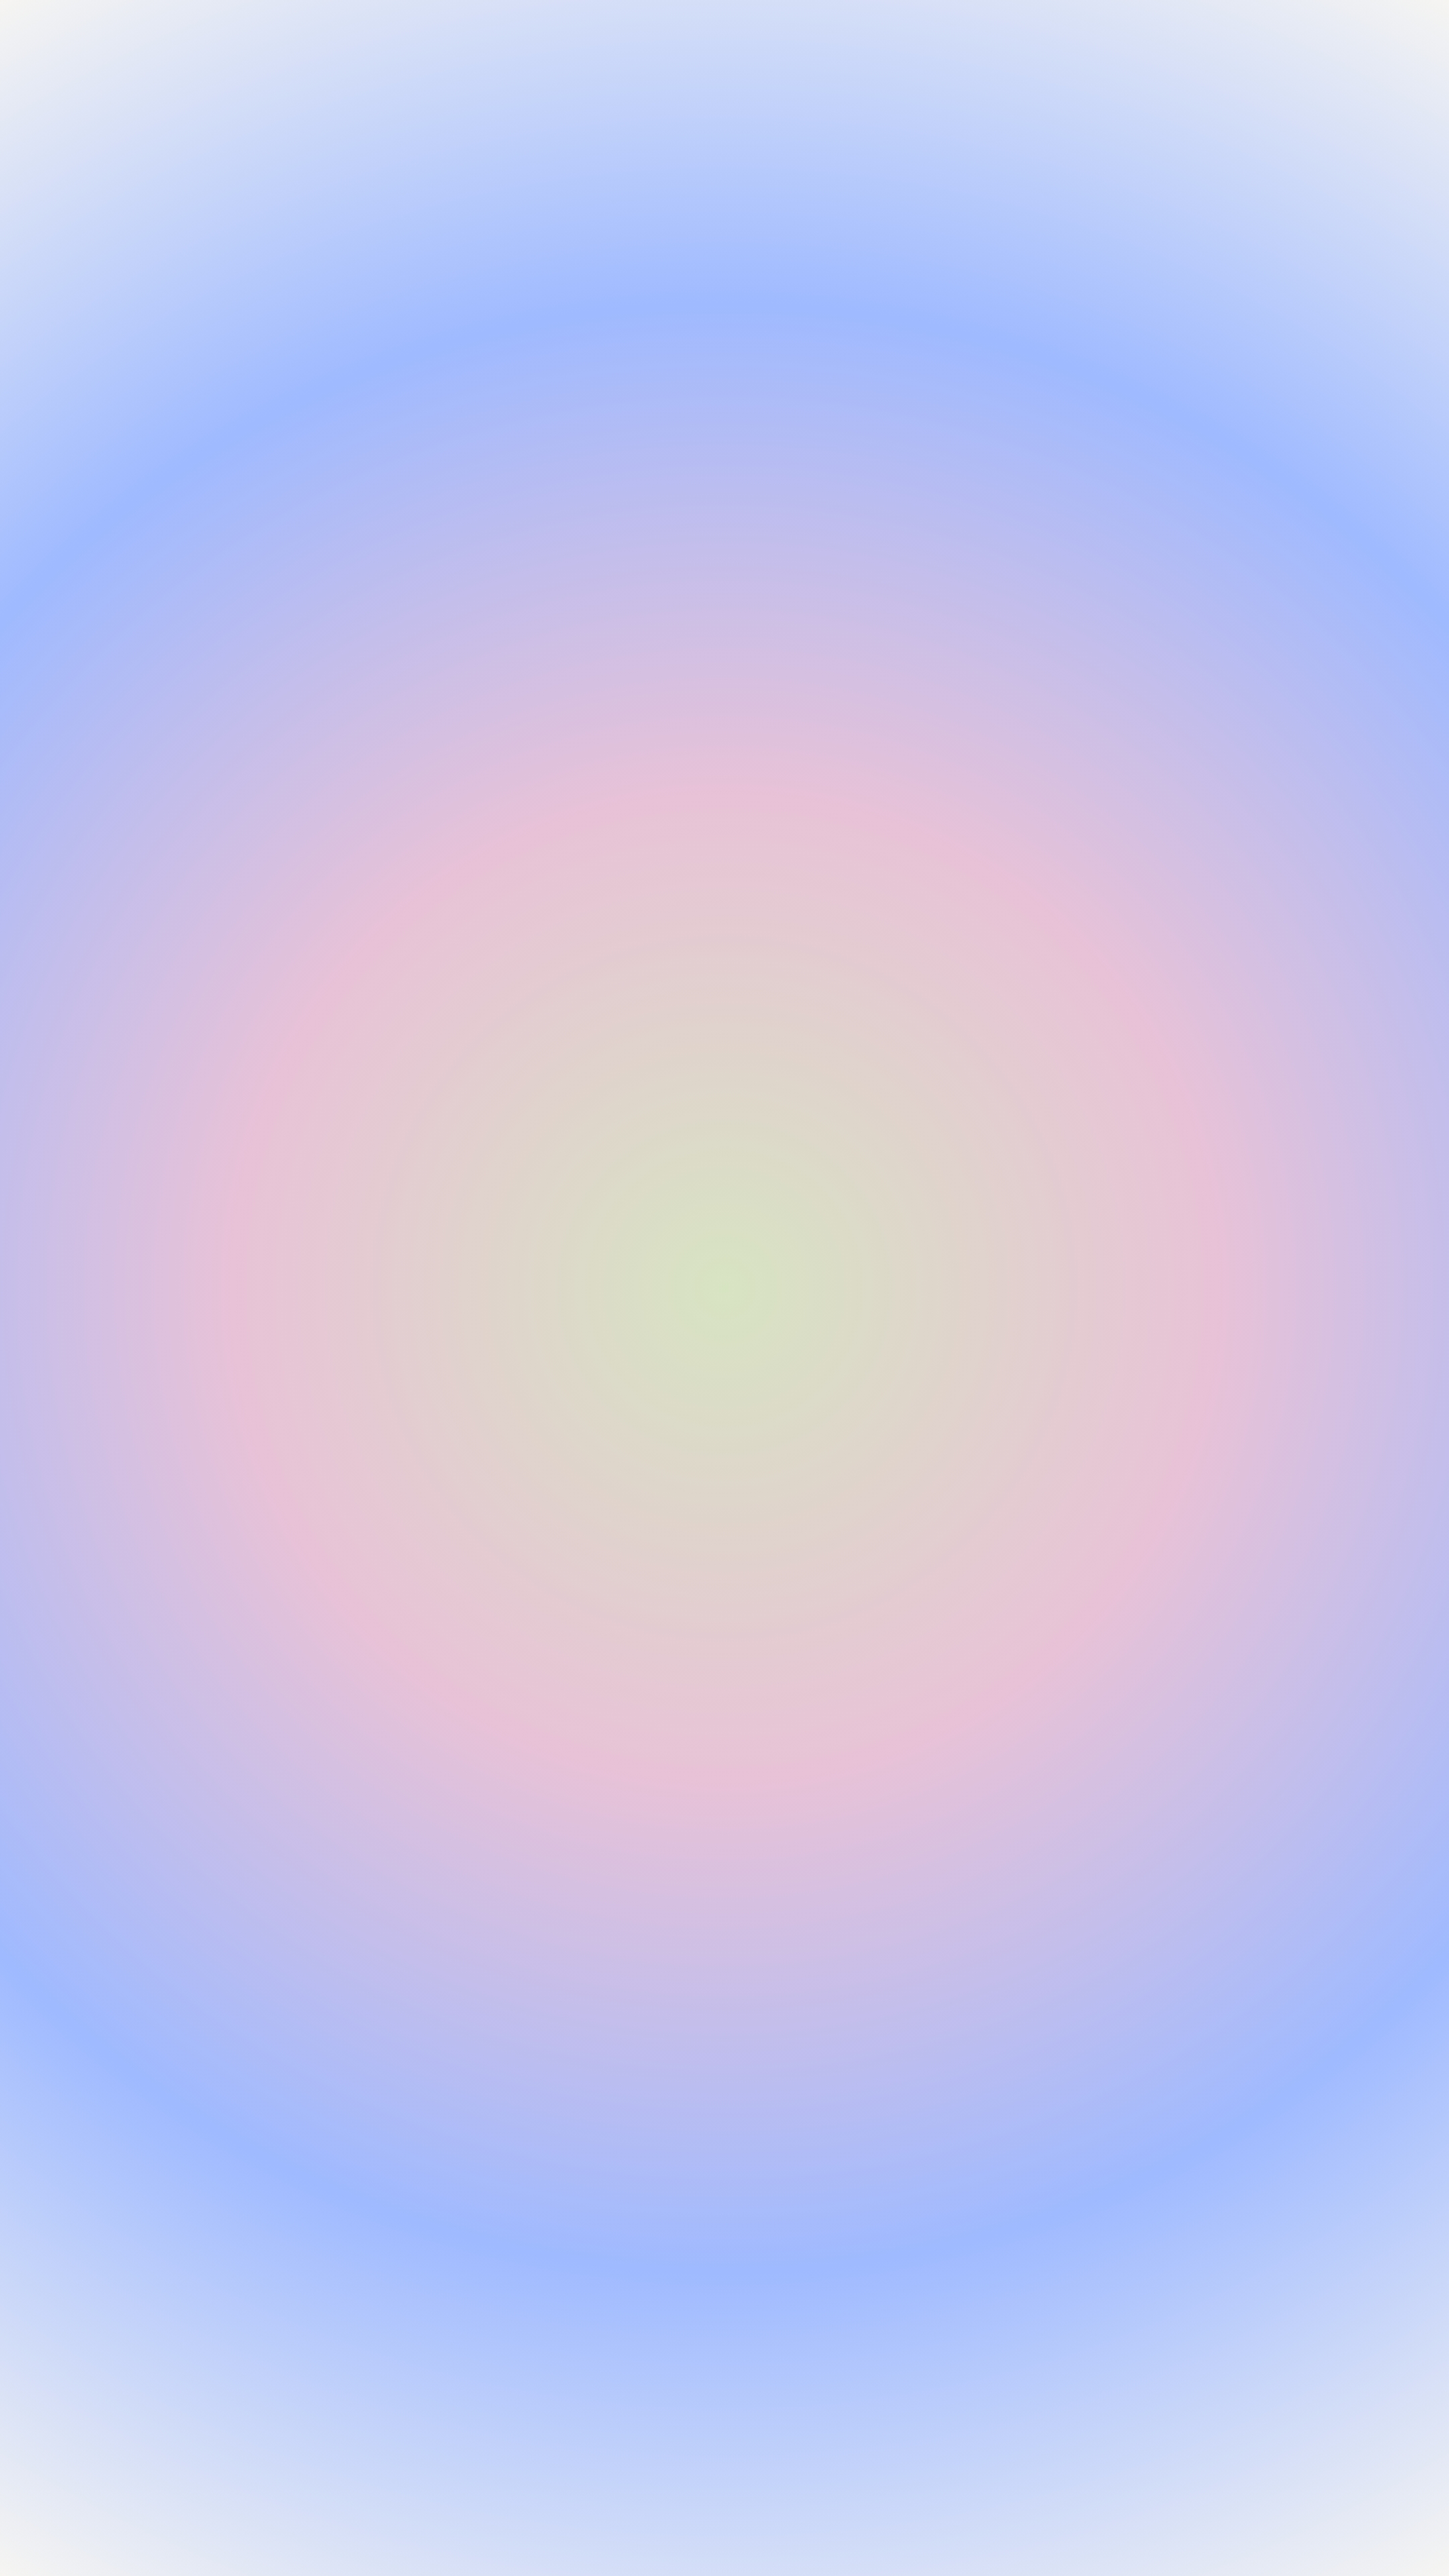 Soothing Pastel Gradient Sky Валлпапер[a0eec64c9c8b4f98bd7d]